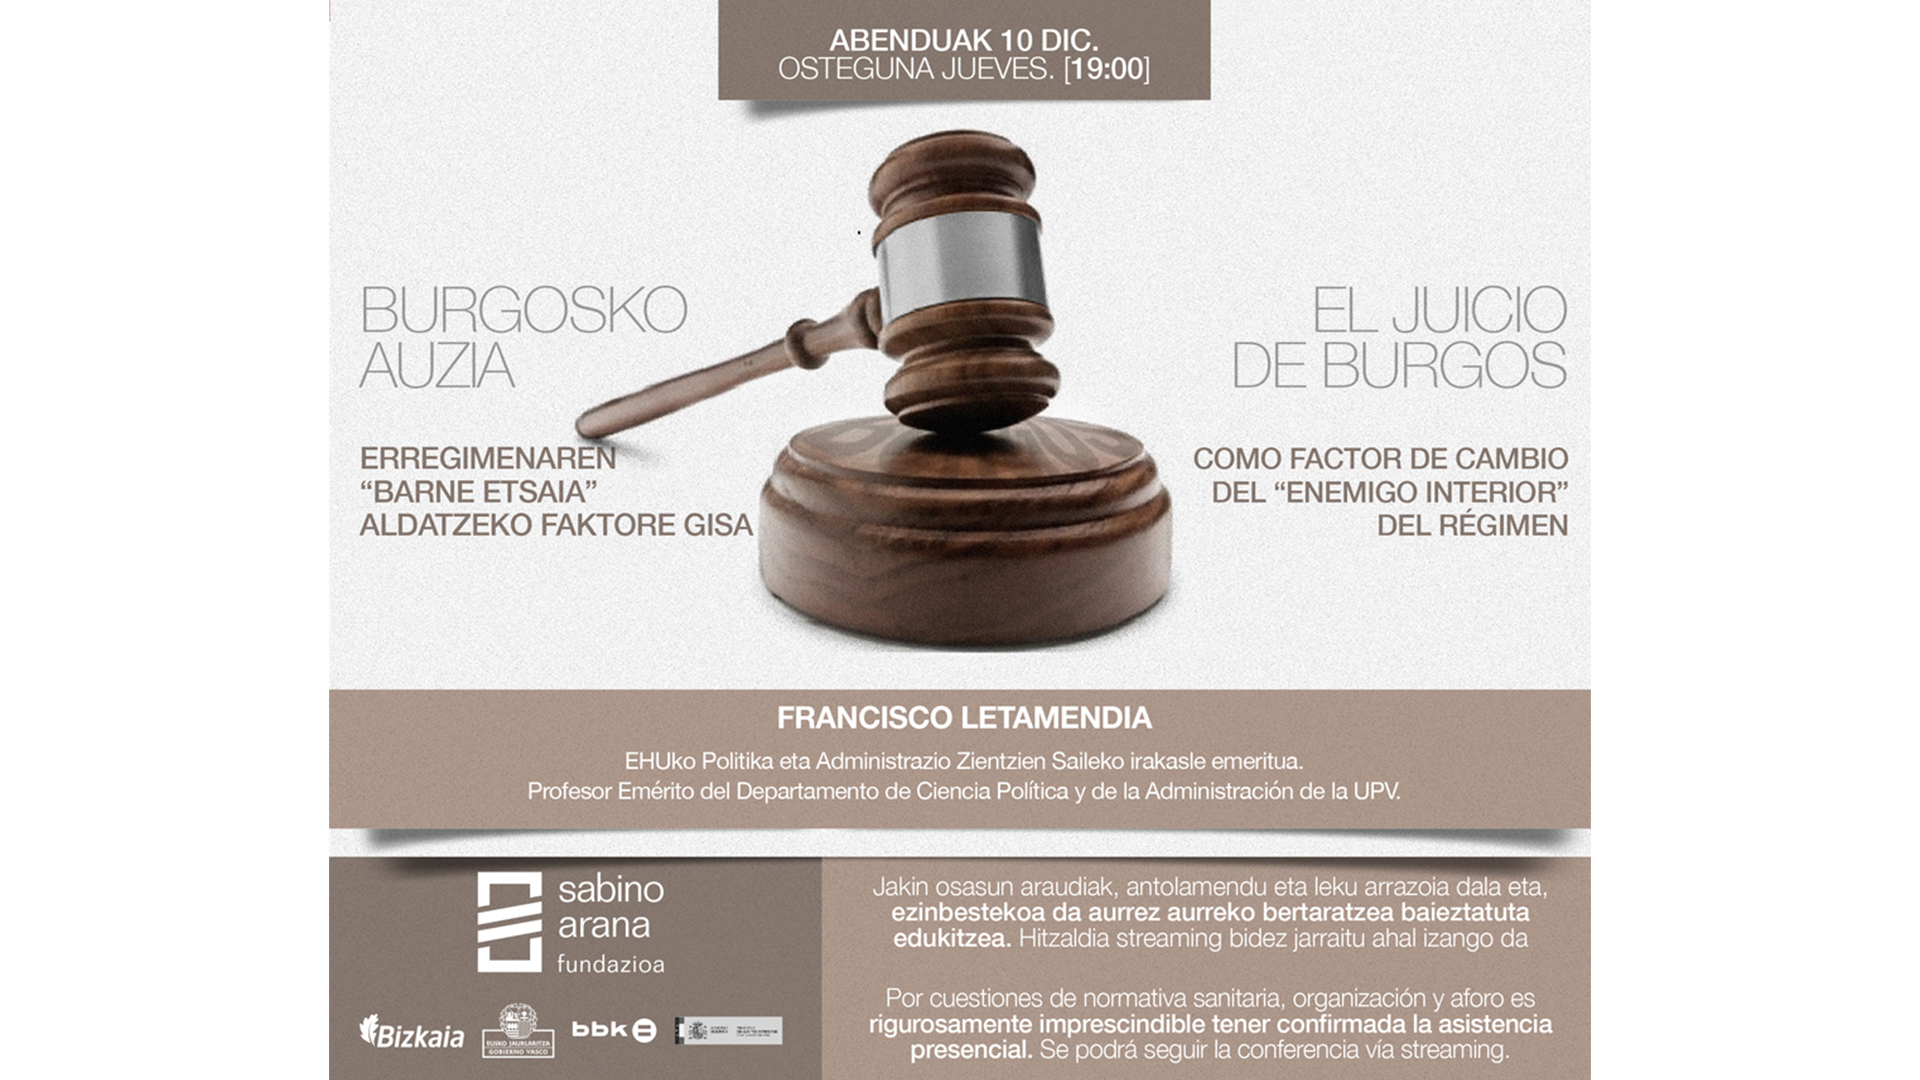 50 aniversario del Proceso de Burgos. Burgosko Epaiketaren 50. urteurrena